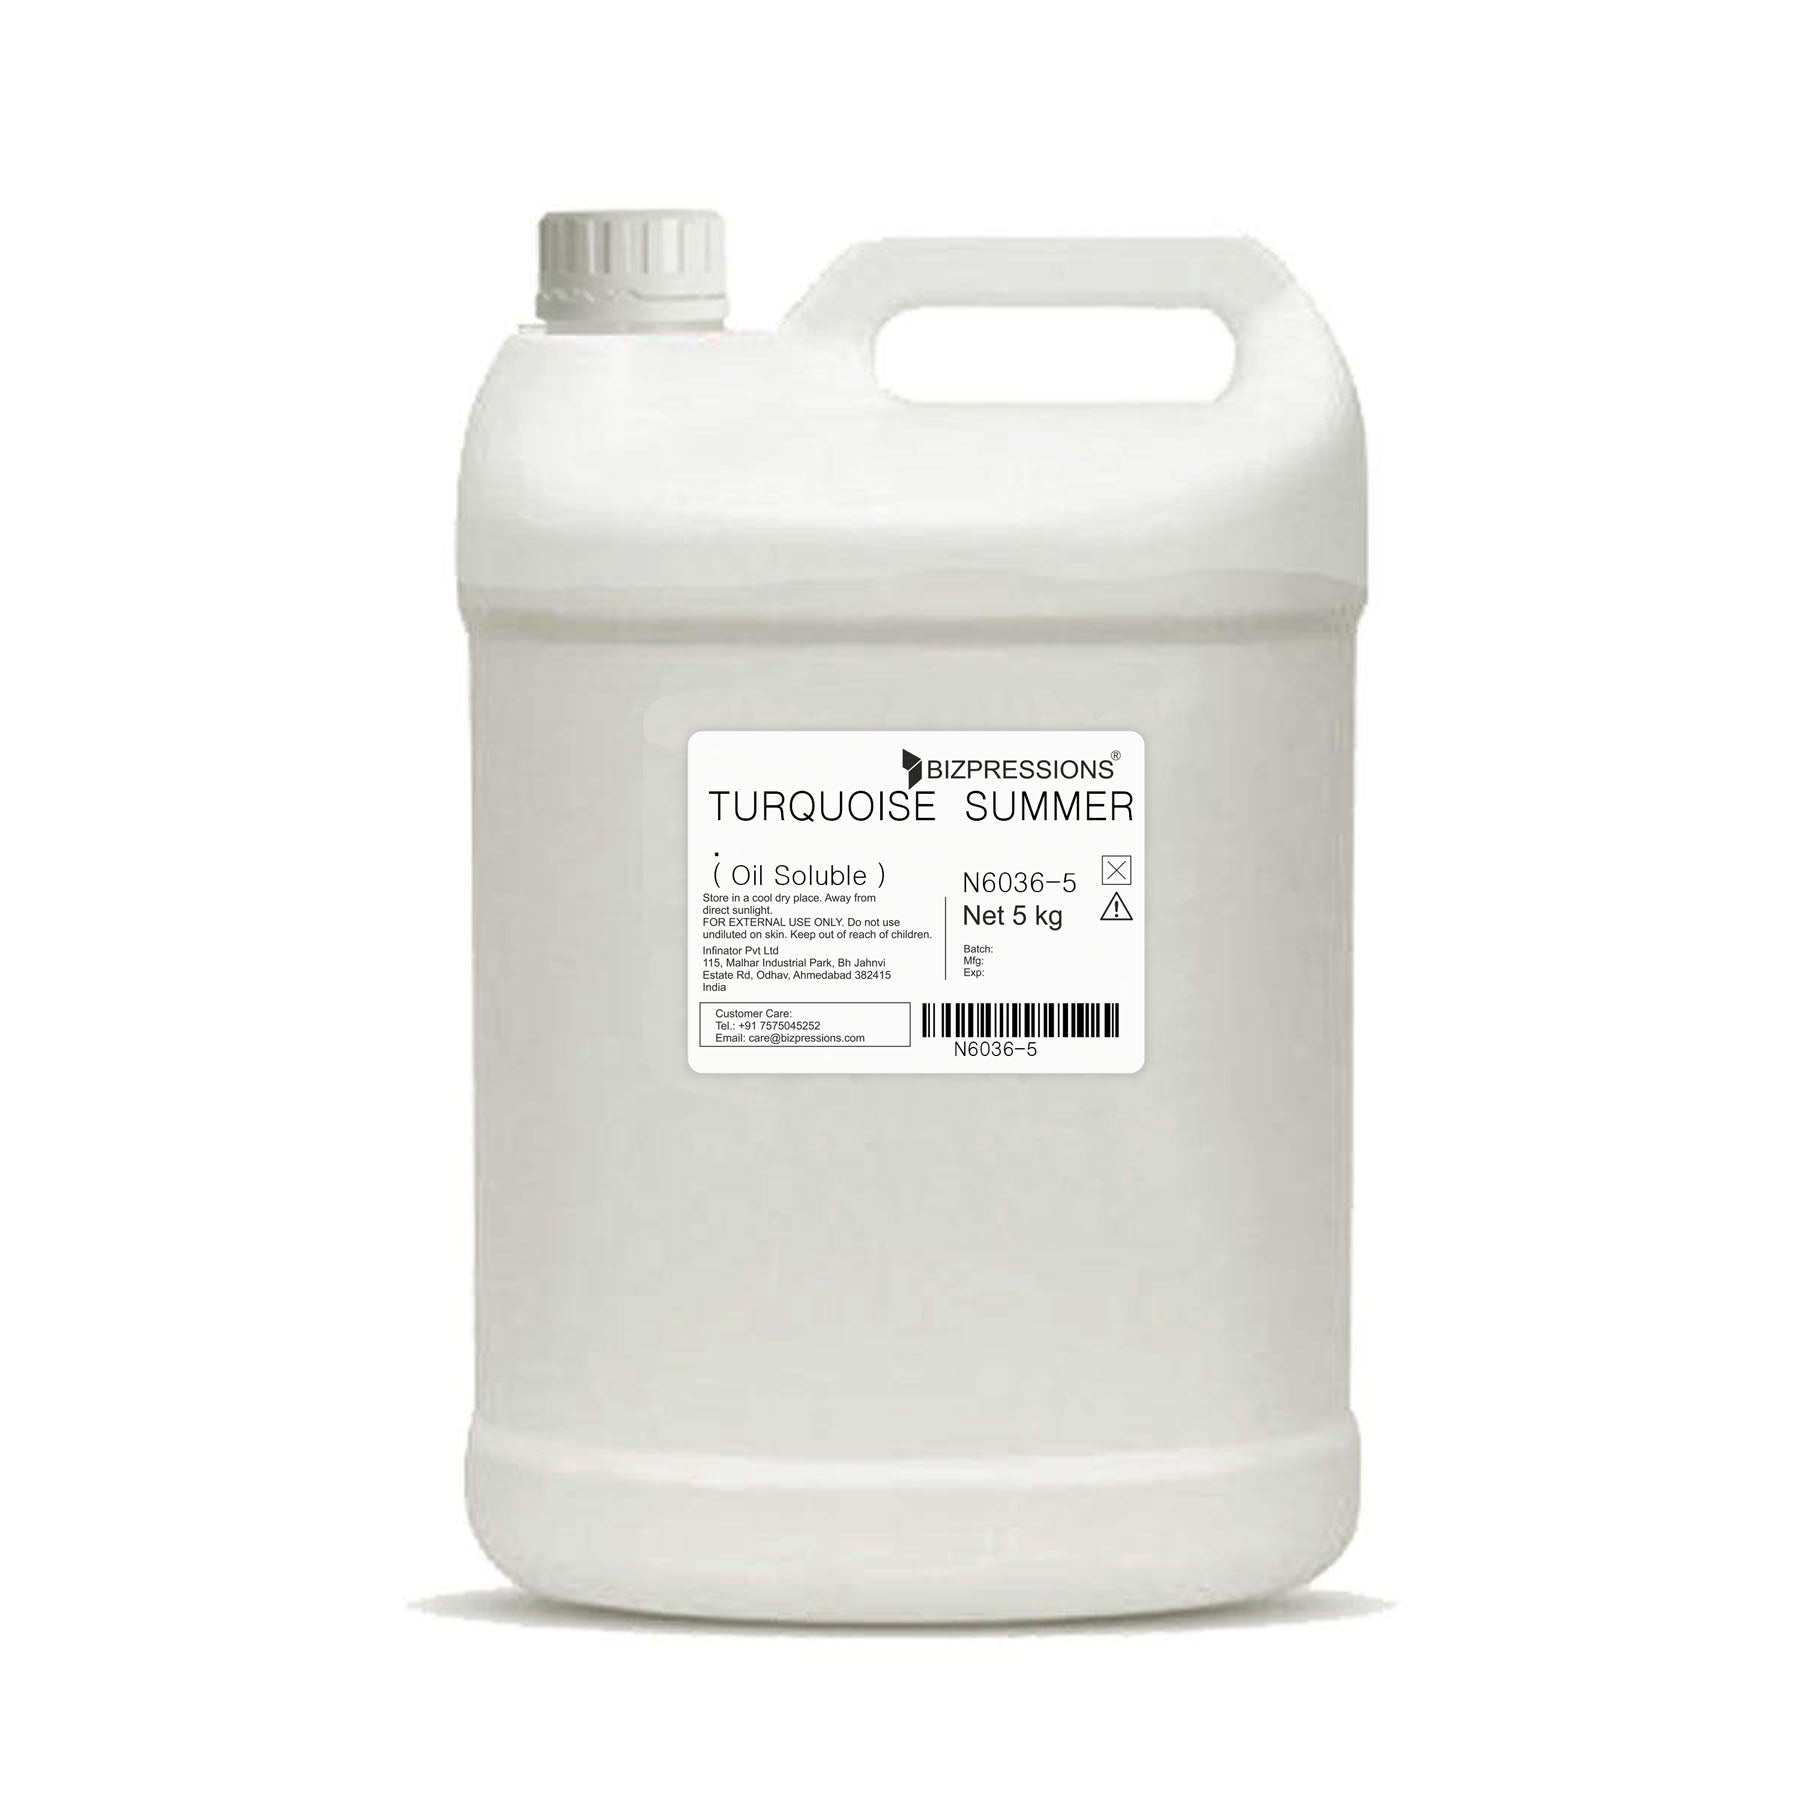 TURQUOISE SUMMER - Fragrance ( Oil Soluble ) - 5 kg